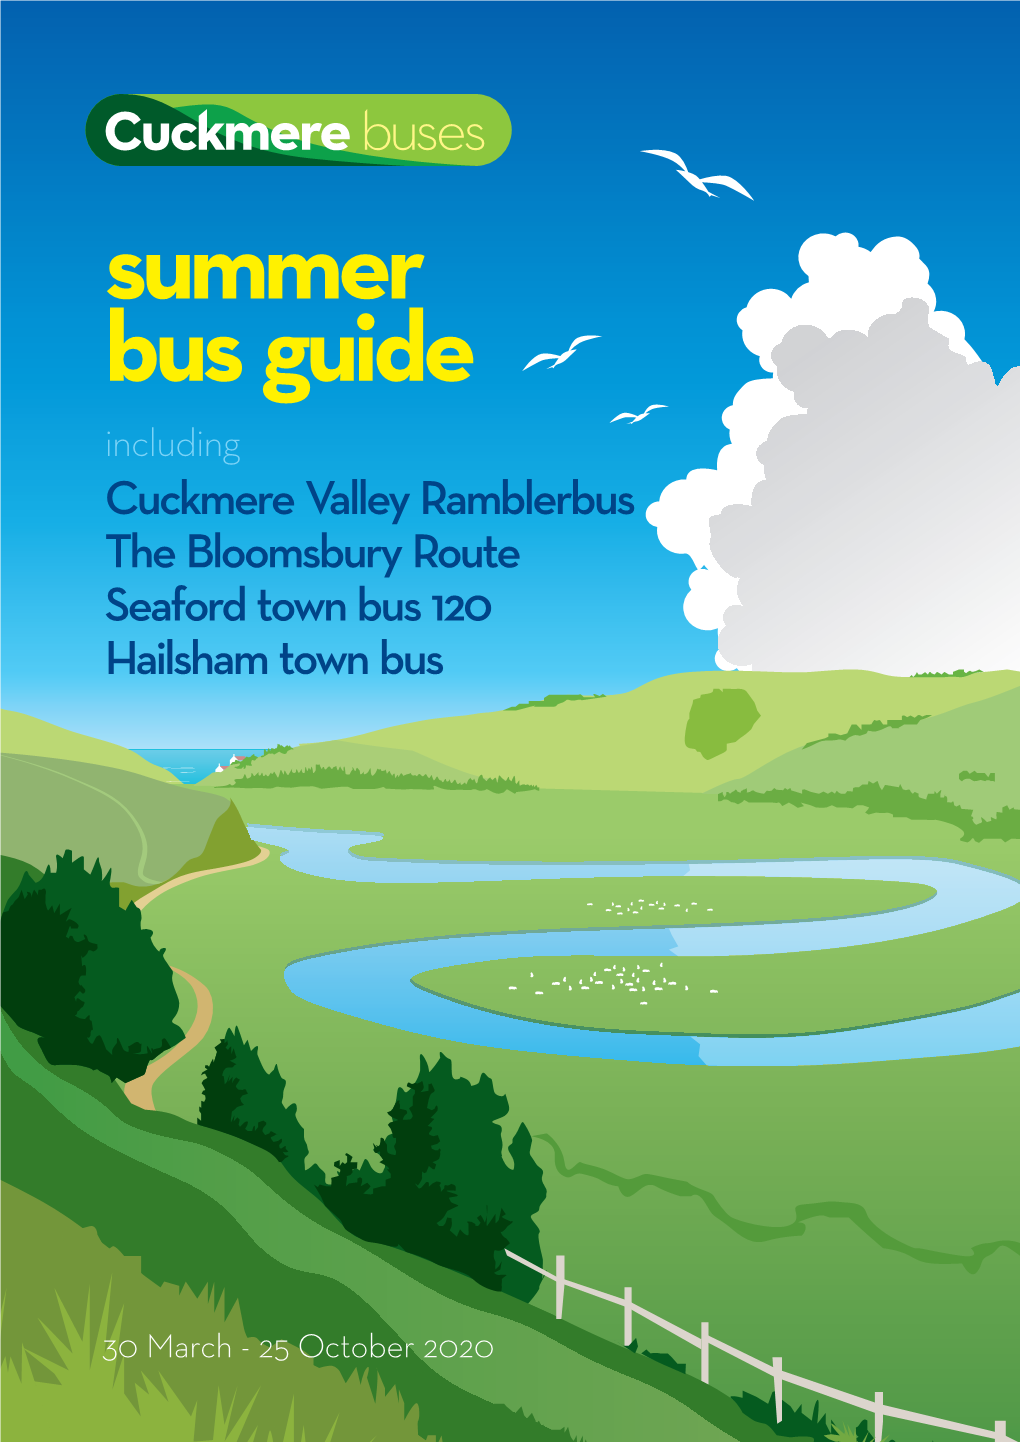 Summer Bus Guide Including Cuckmere Valley Ramblerbus the Bloomsbury Route Seaford Town Bus 120 Hailsham Town Bus